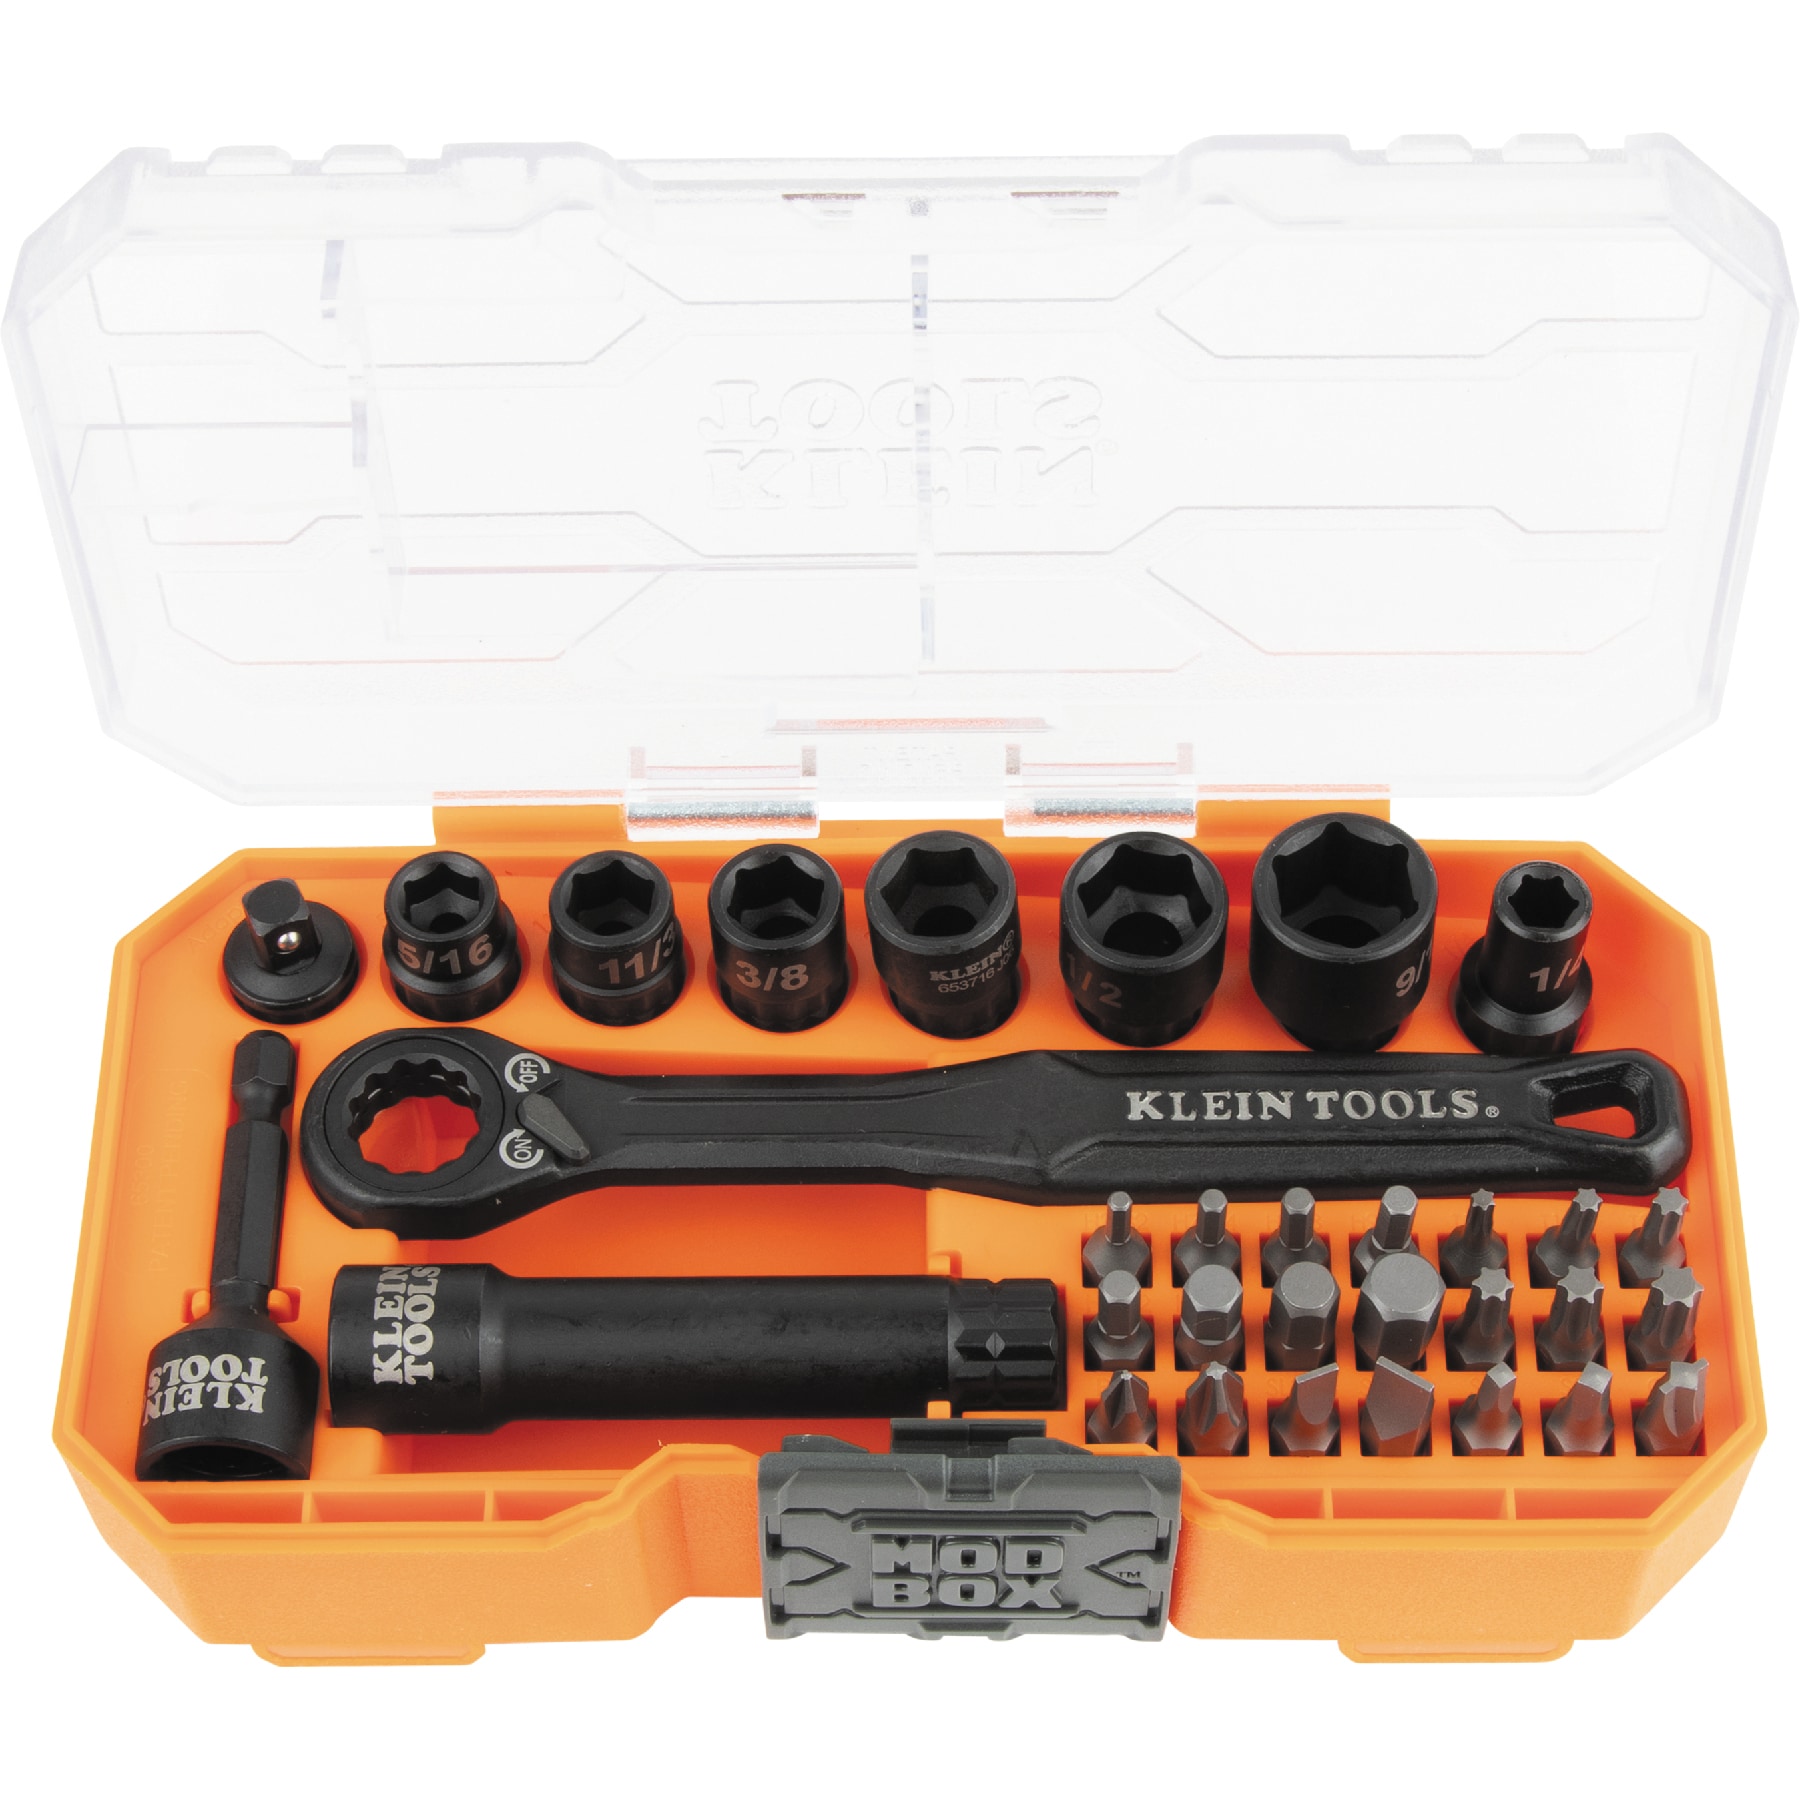 Portable mini toolbox organizer: socket wrench kit- Beta Tools